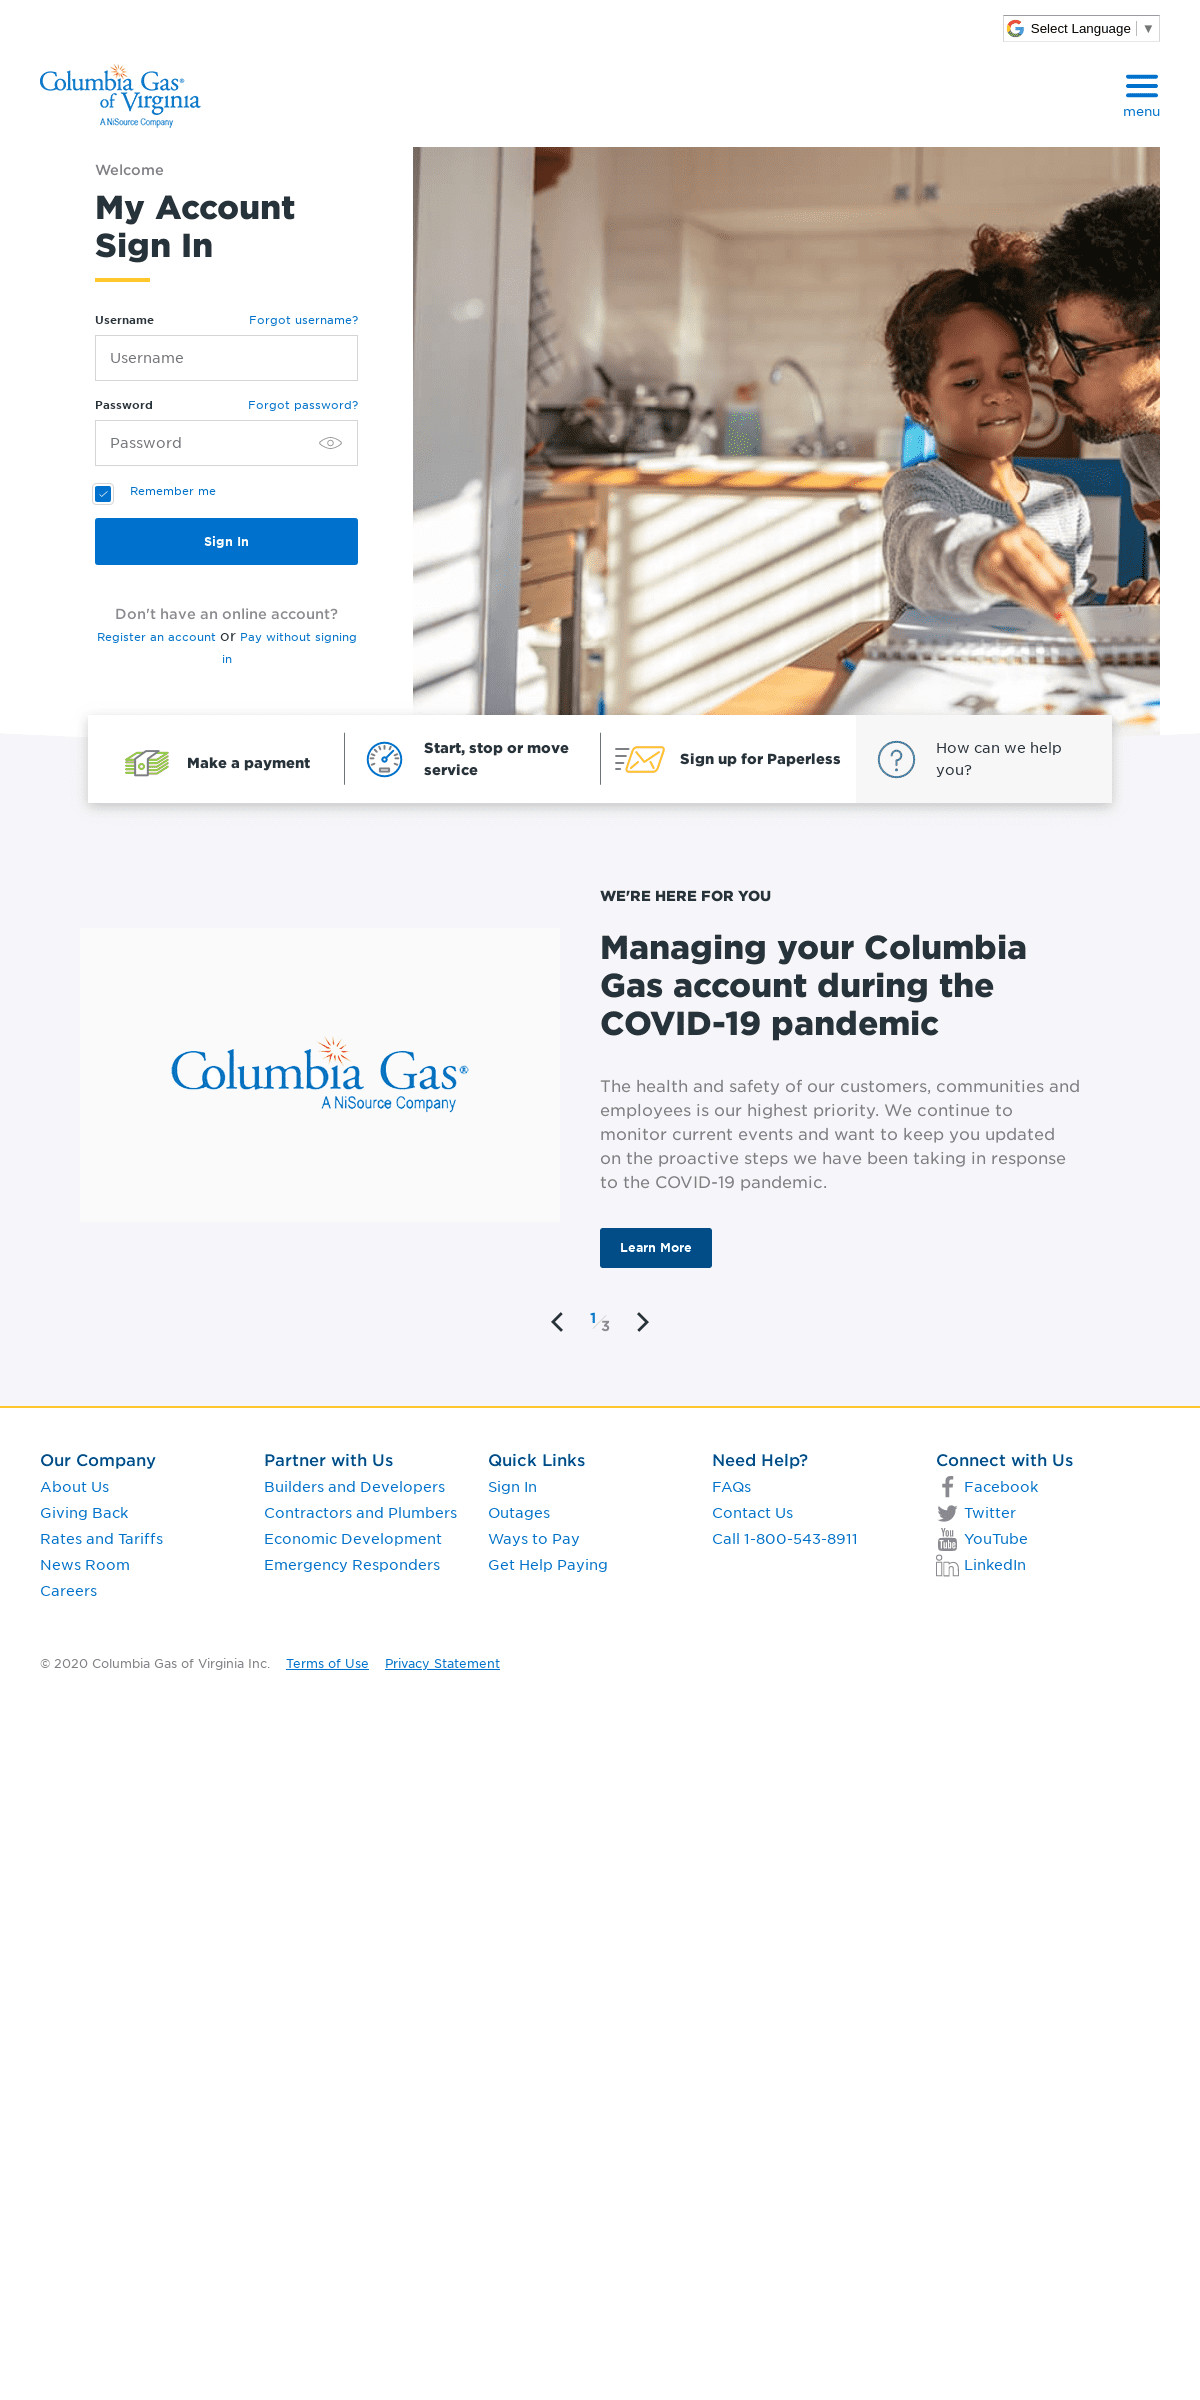 A complete backup of columbiagasva.com